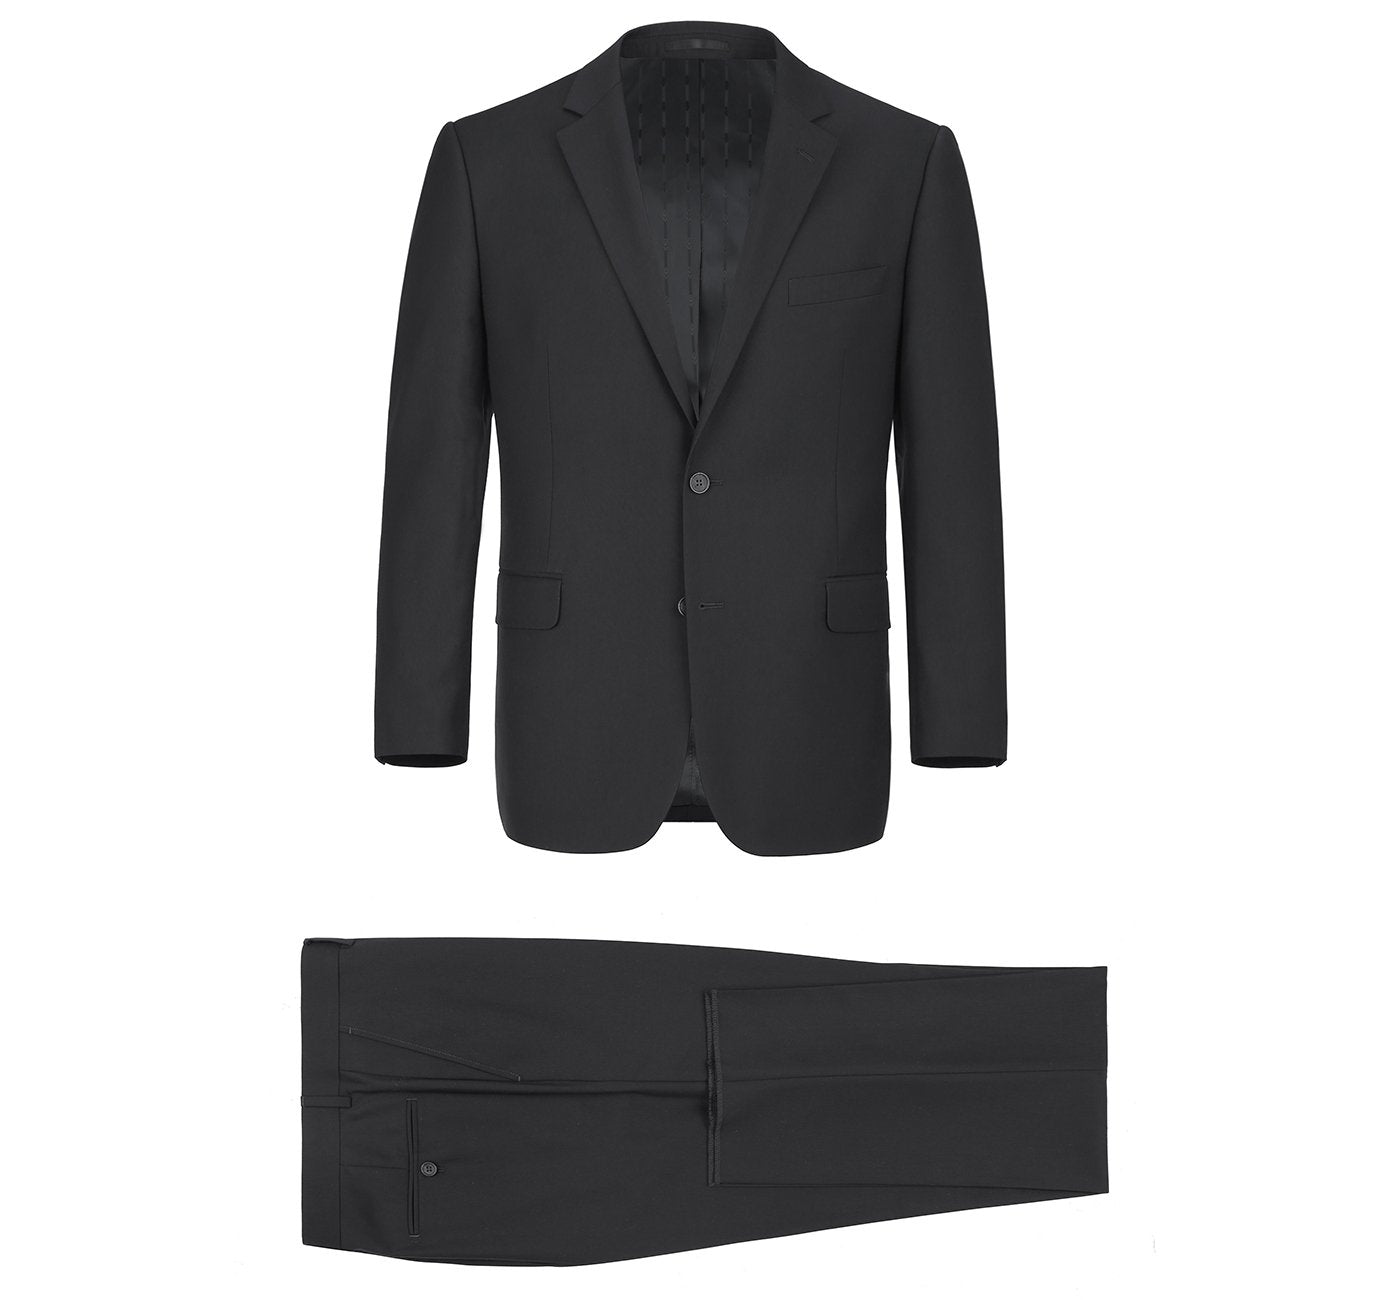 201-1 Men's 2-Piece Single Breasted Black Notch Lapel Suit